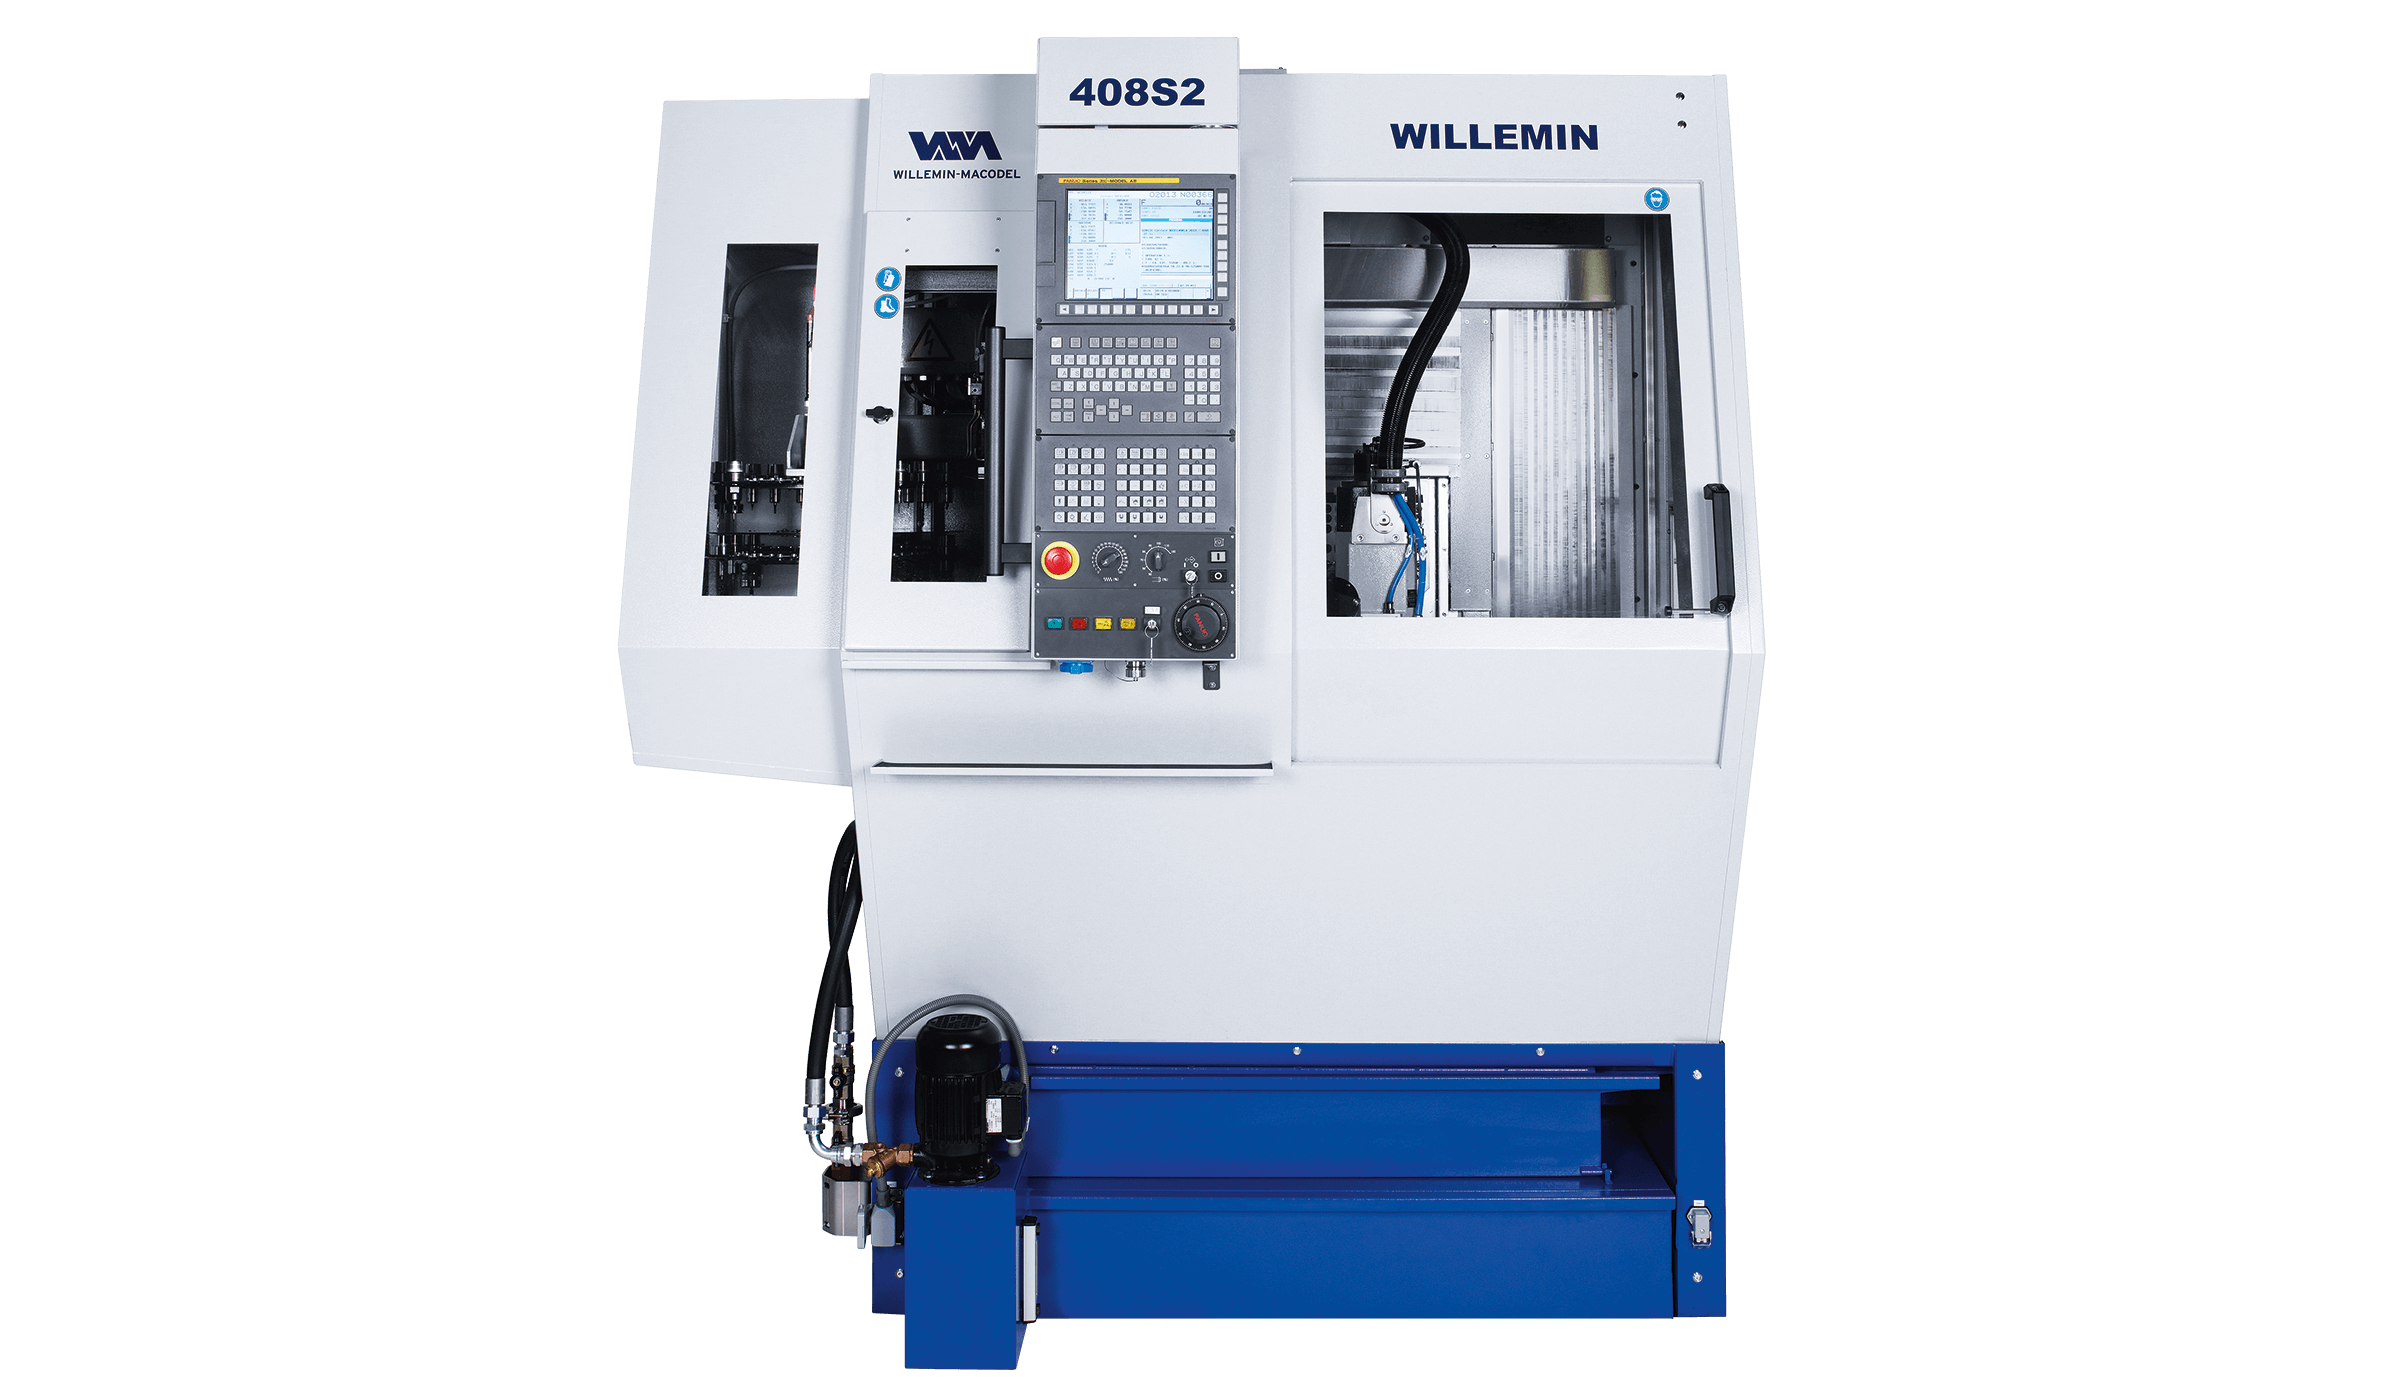 willemin-macodel machining center - serie 40 - 408S2